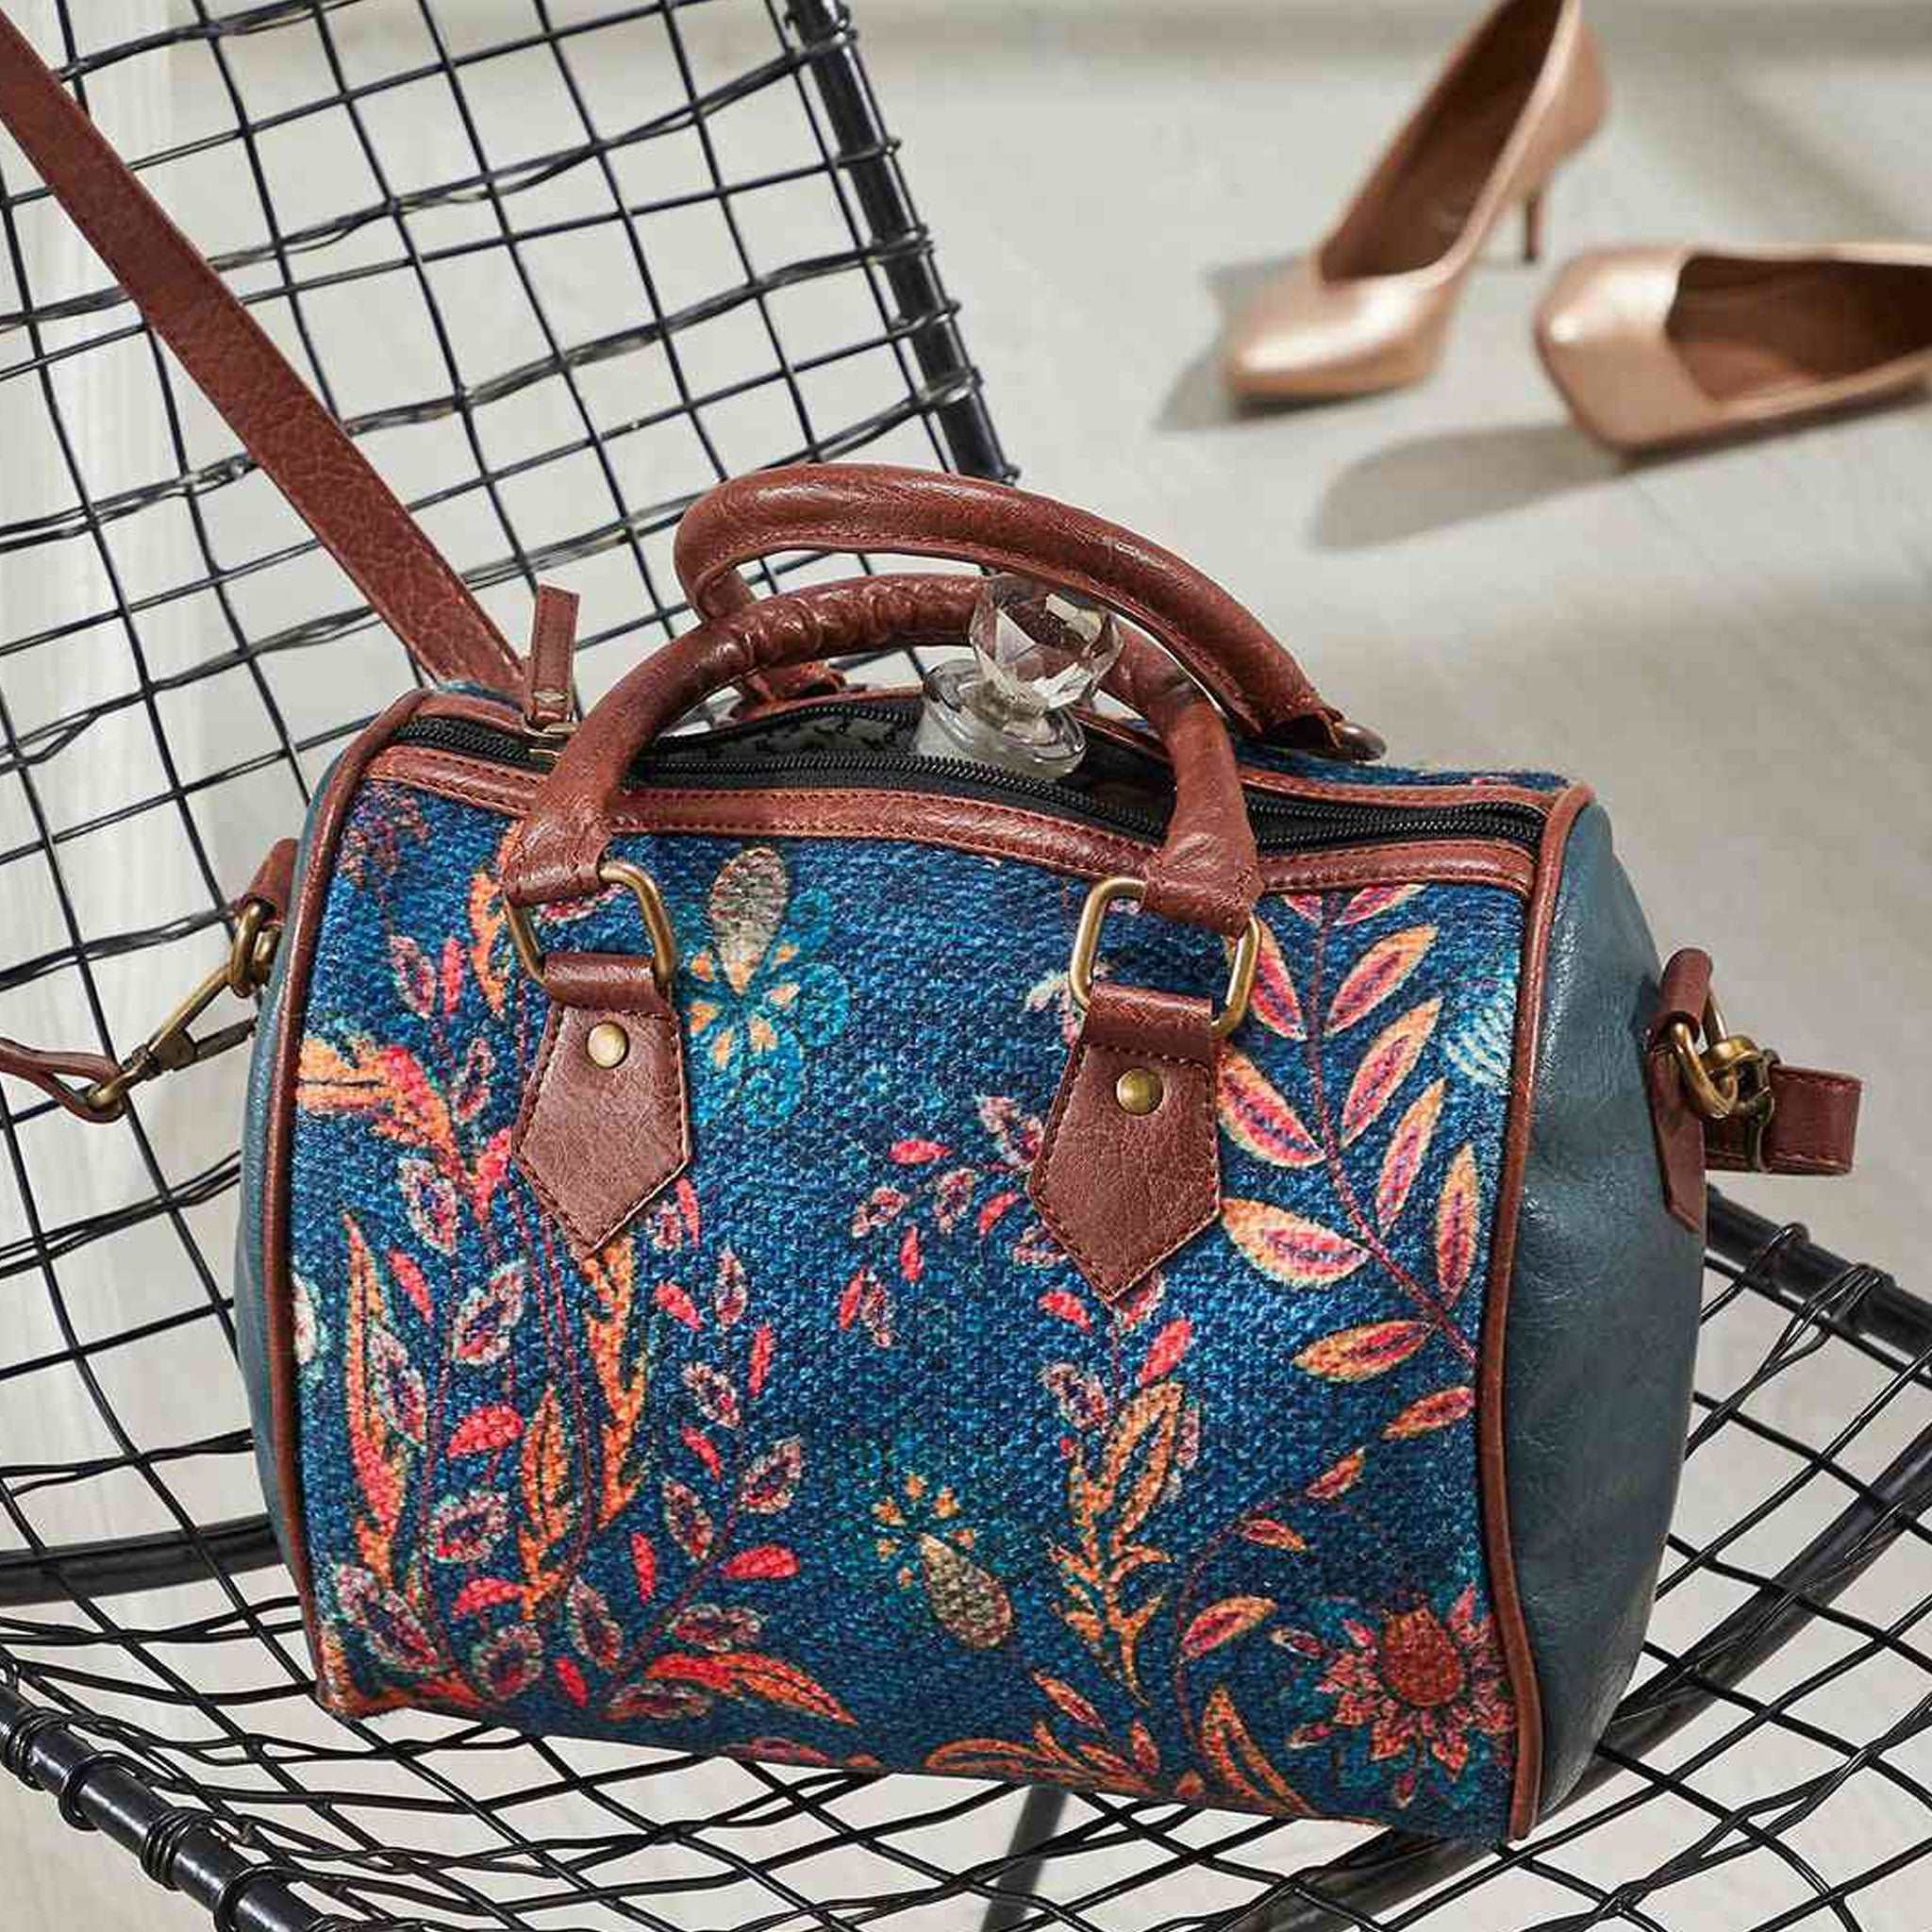 Mona B Canvas Small Vintage Handbag, Shoulder Bag, Crossbody Bag For Shopping, Travel With Stylish Design For Women (Blue, Kilim) - M-7004 - Handbag by Mona-B - Backpack, Flash Sale, Flat40, Sale, 